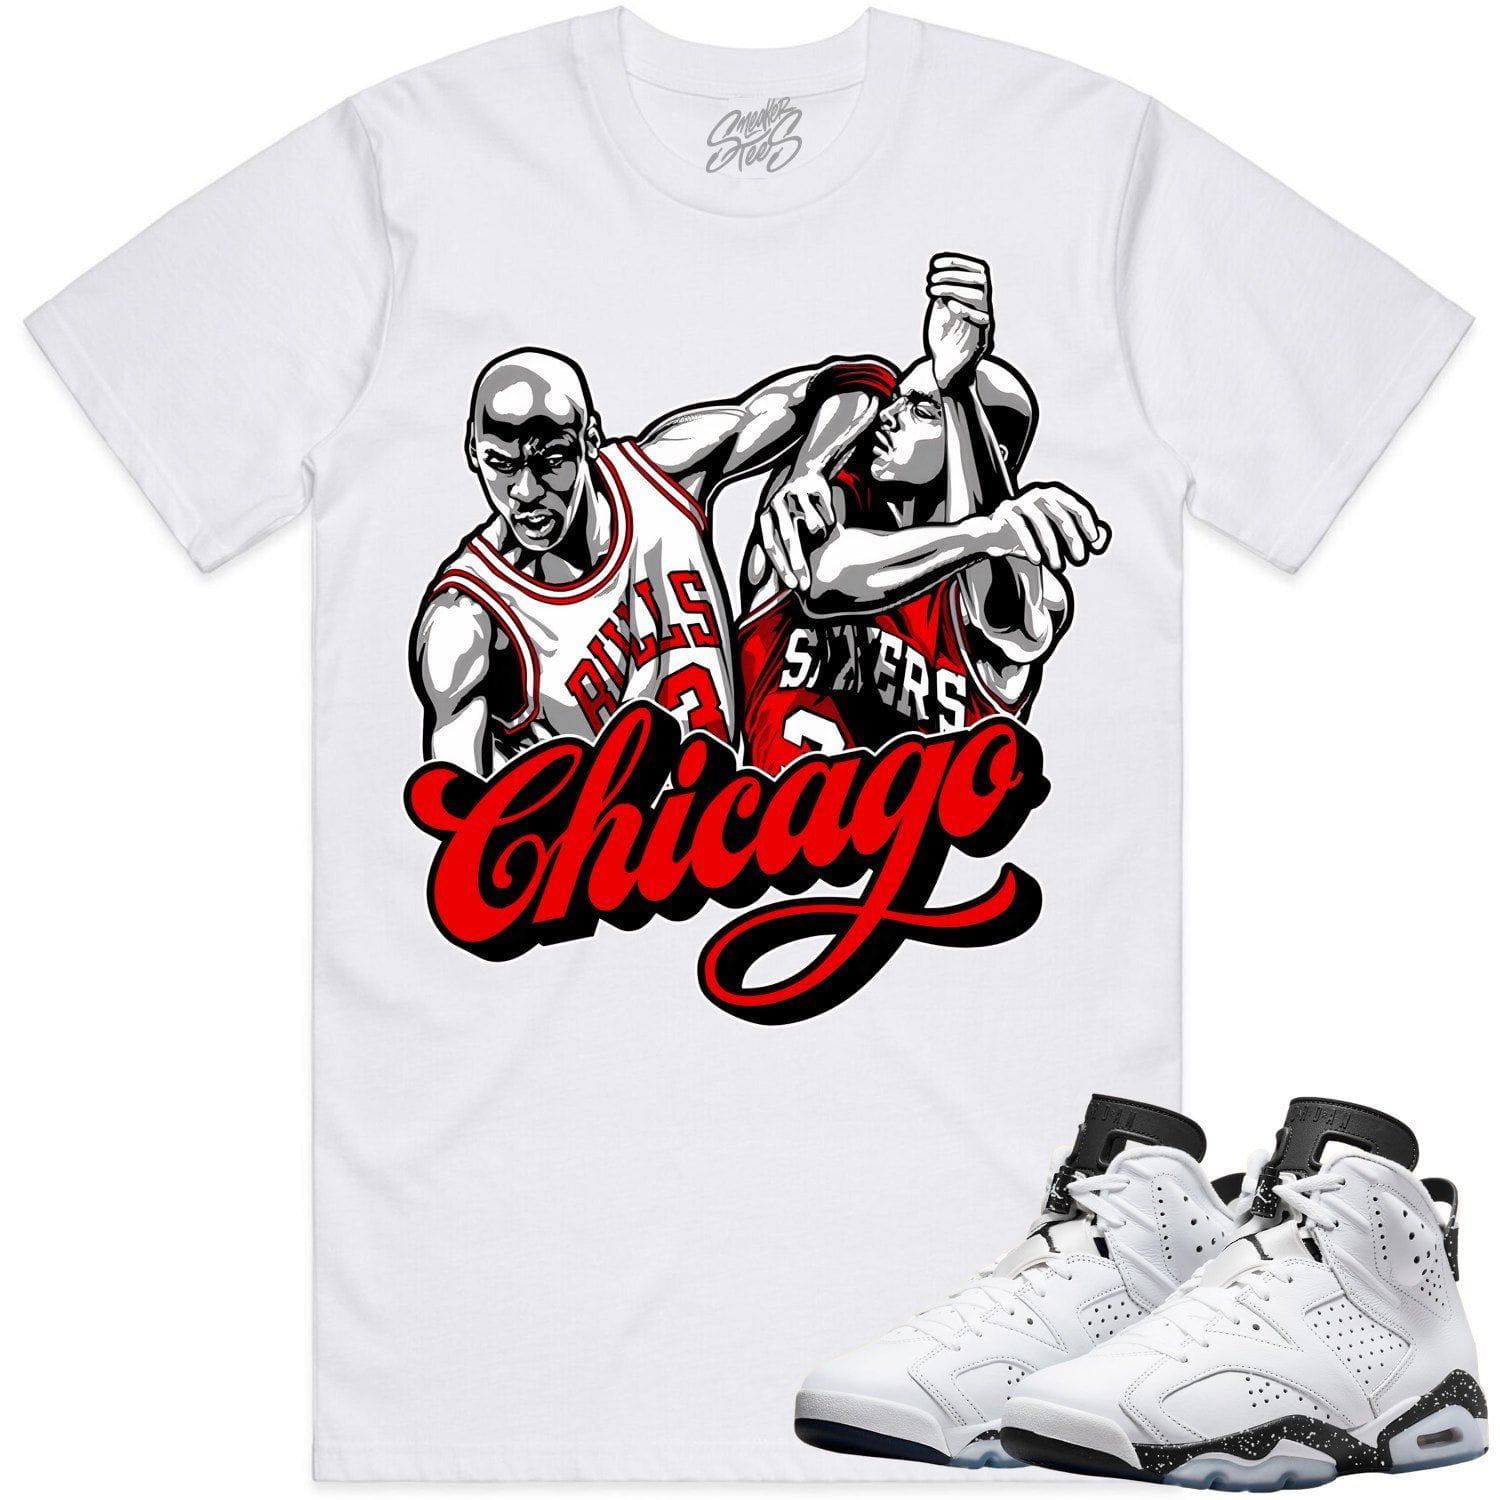 Oreo 6s Shirts - Jordan 6 Reverse Oreo 6s Sneaker Tees - Chicago